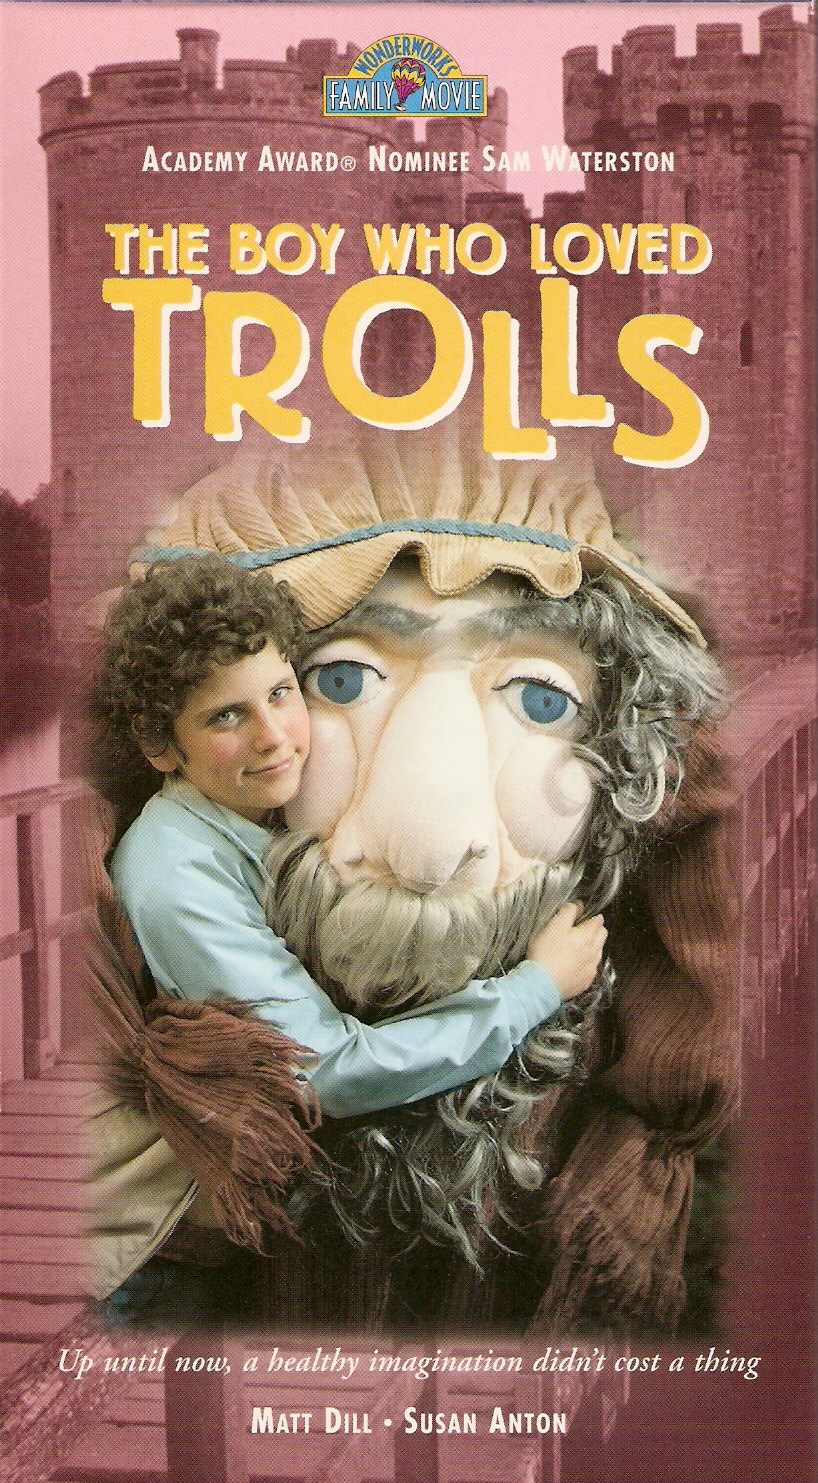 The Boy Who Loved Trolls (1984) Screenshot 5